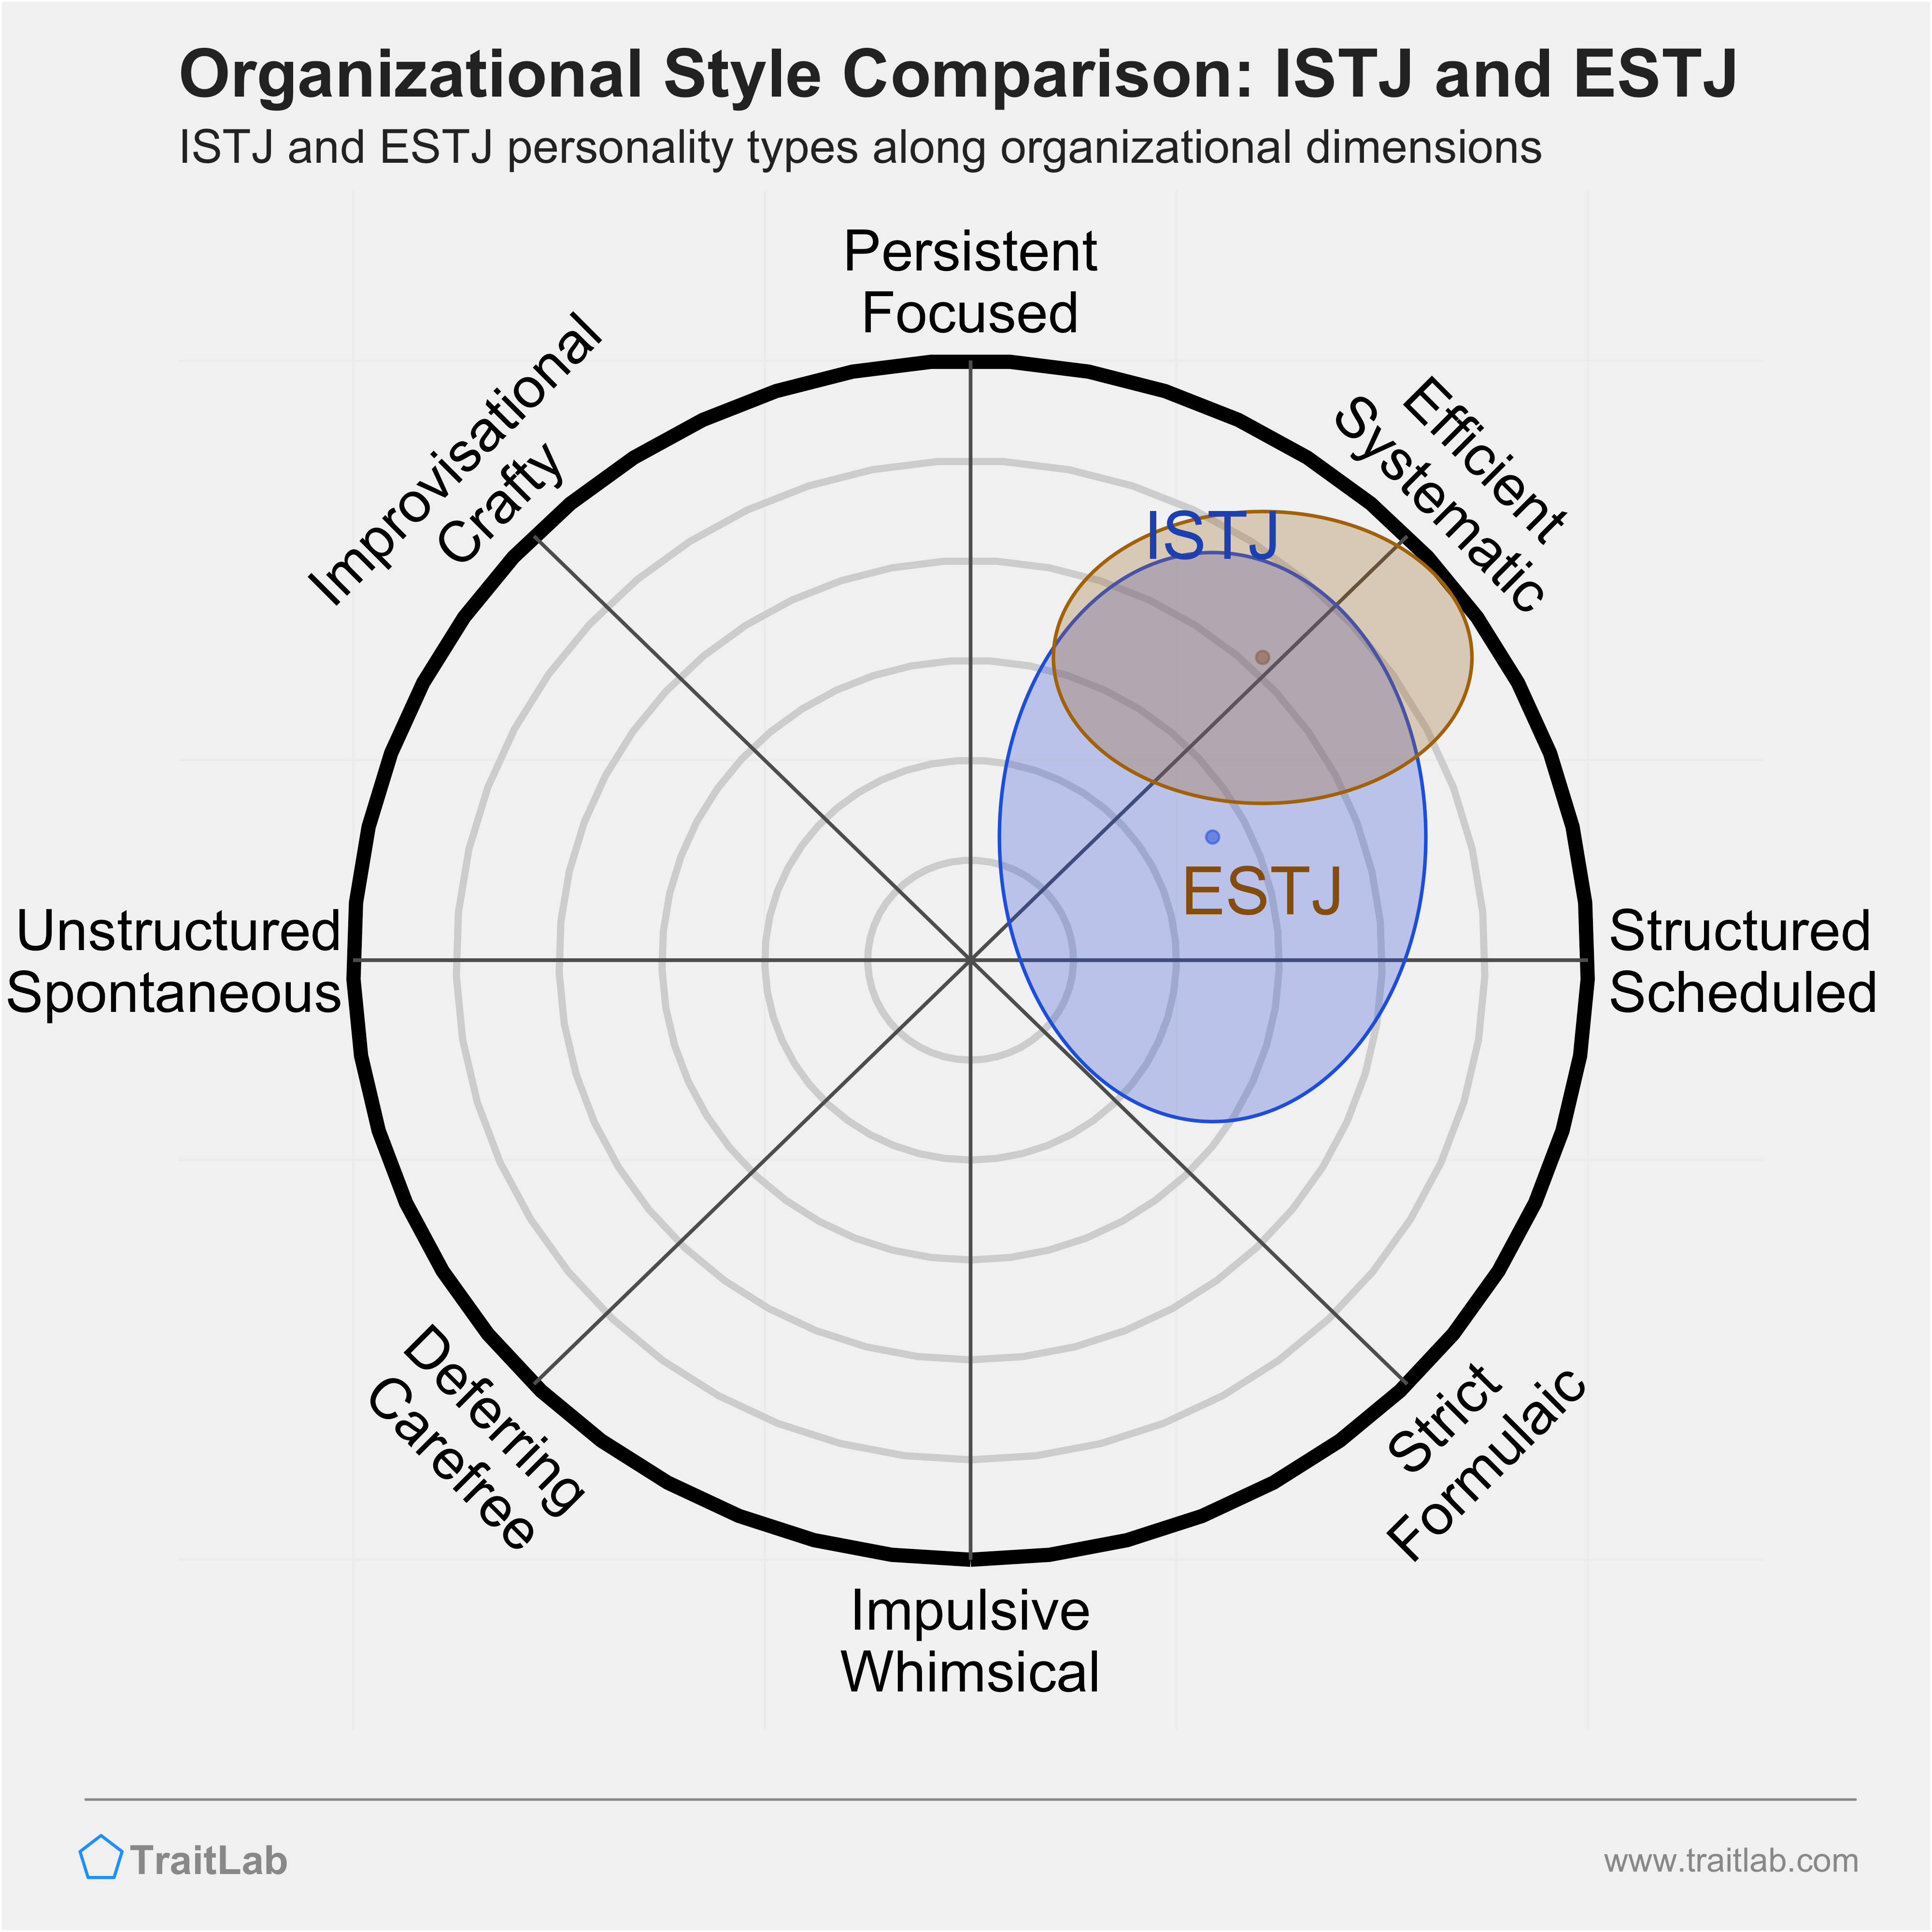 ISTJ and ESTJ comparison across organizational dimensions